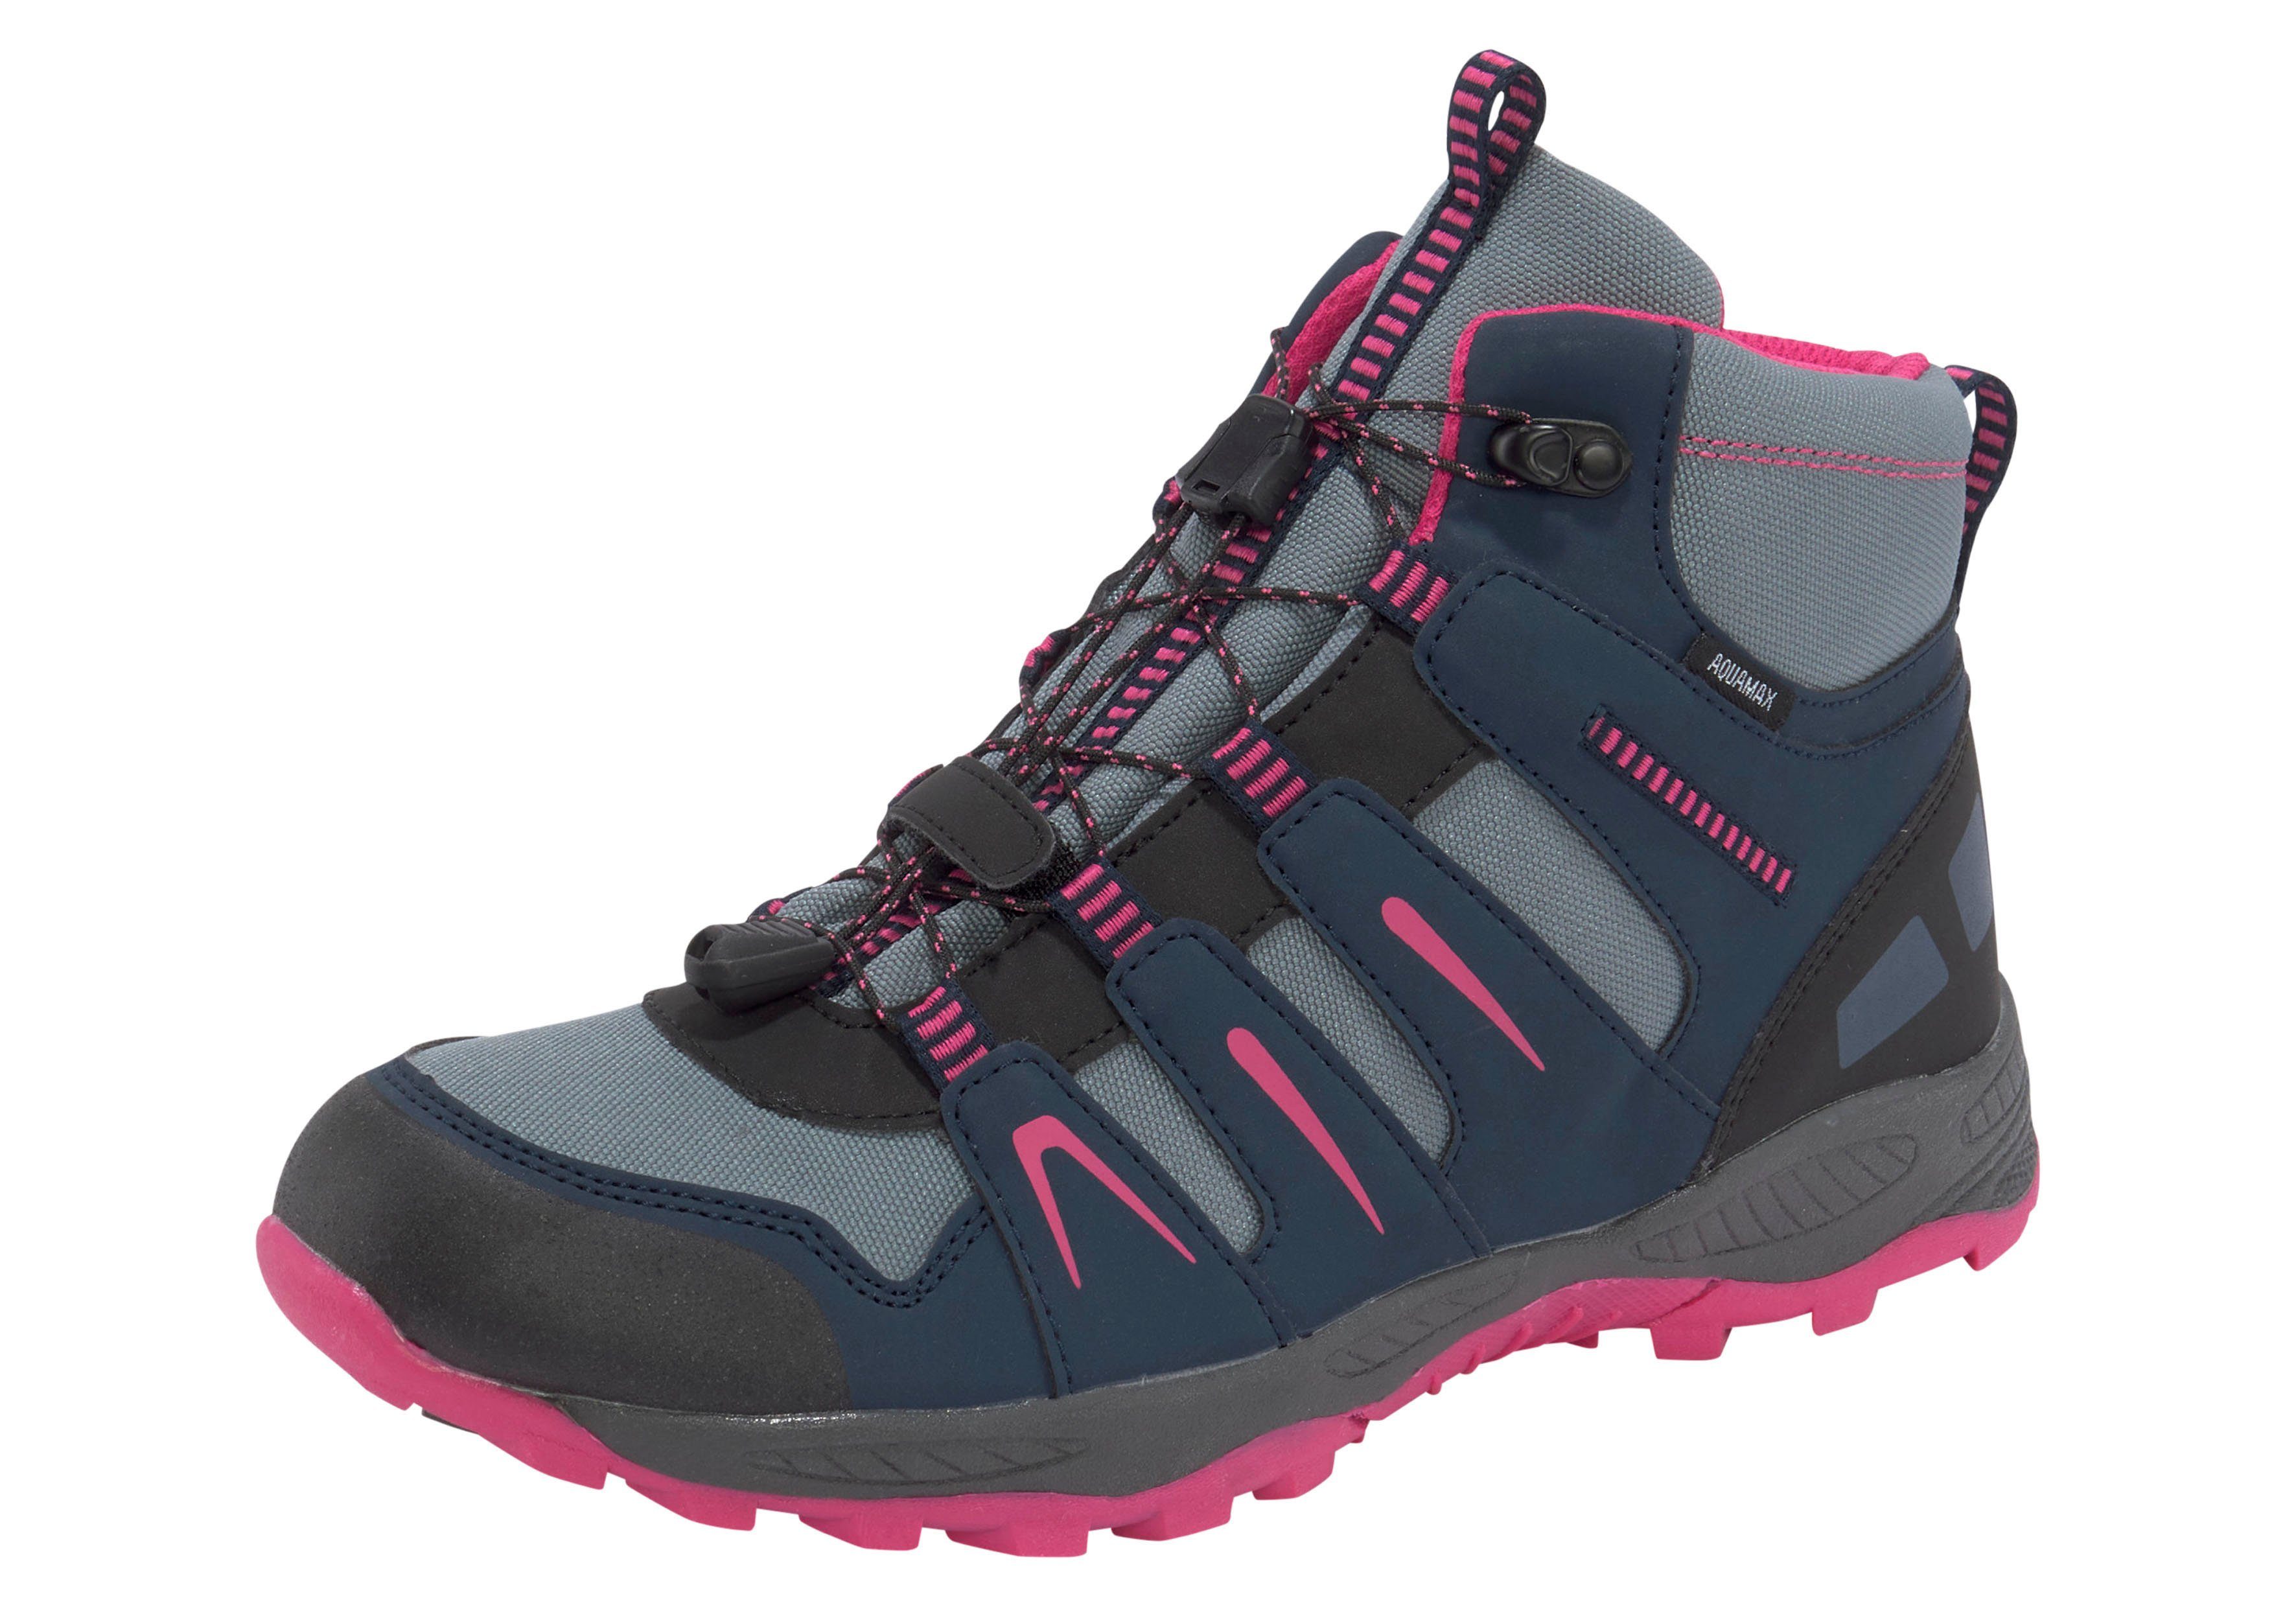 McKINLEY Sonnberg AQX MID Jr. Outdoorschuh wasserdichte Trekkingschuhe für Kinder navy-pink | Outdoorschuhe